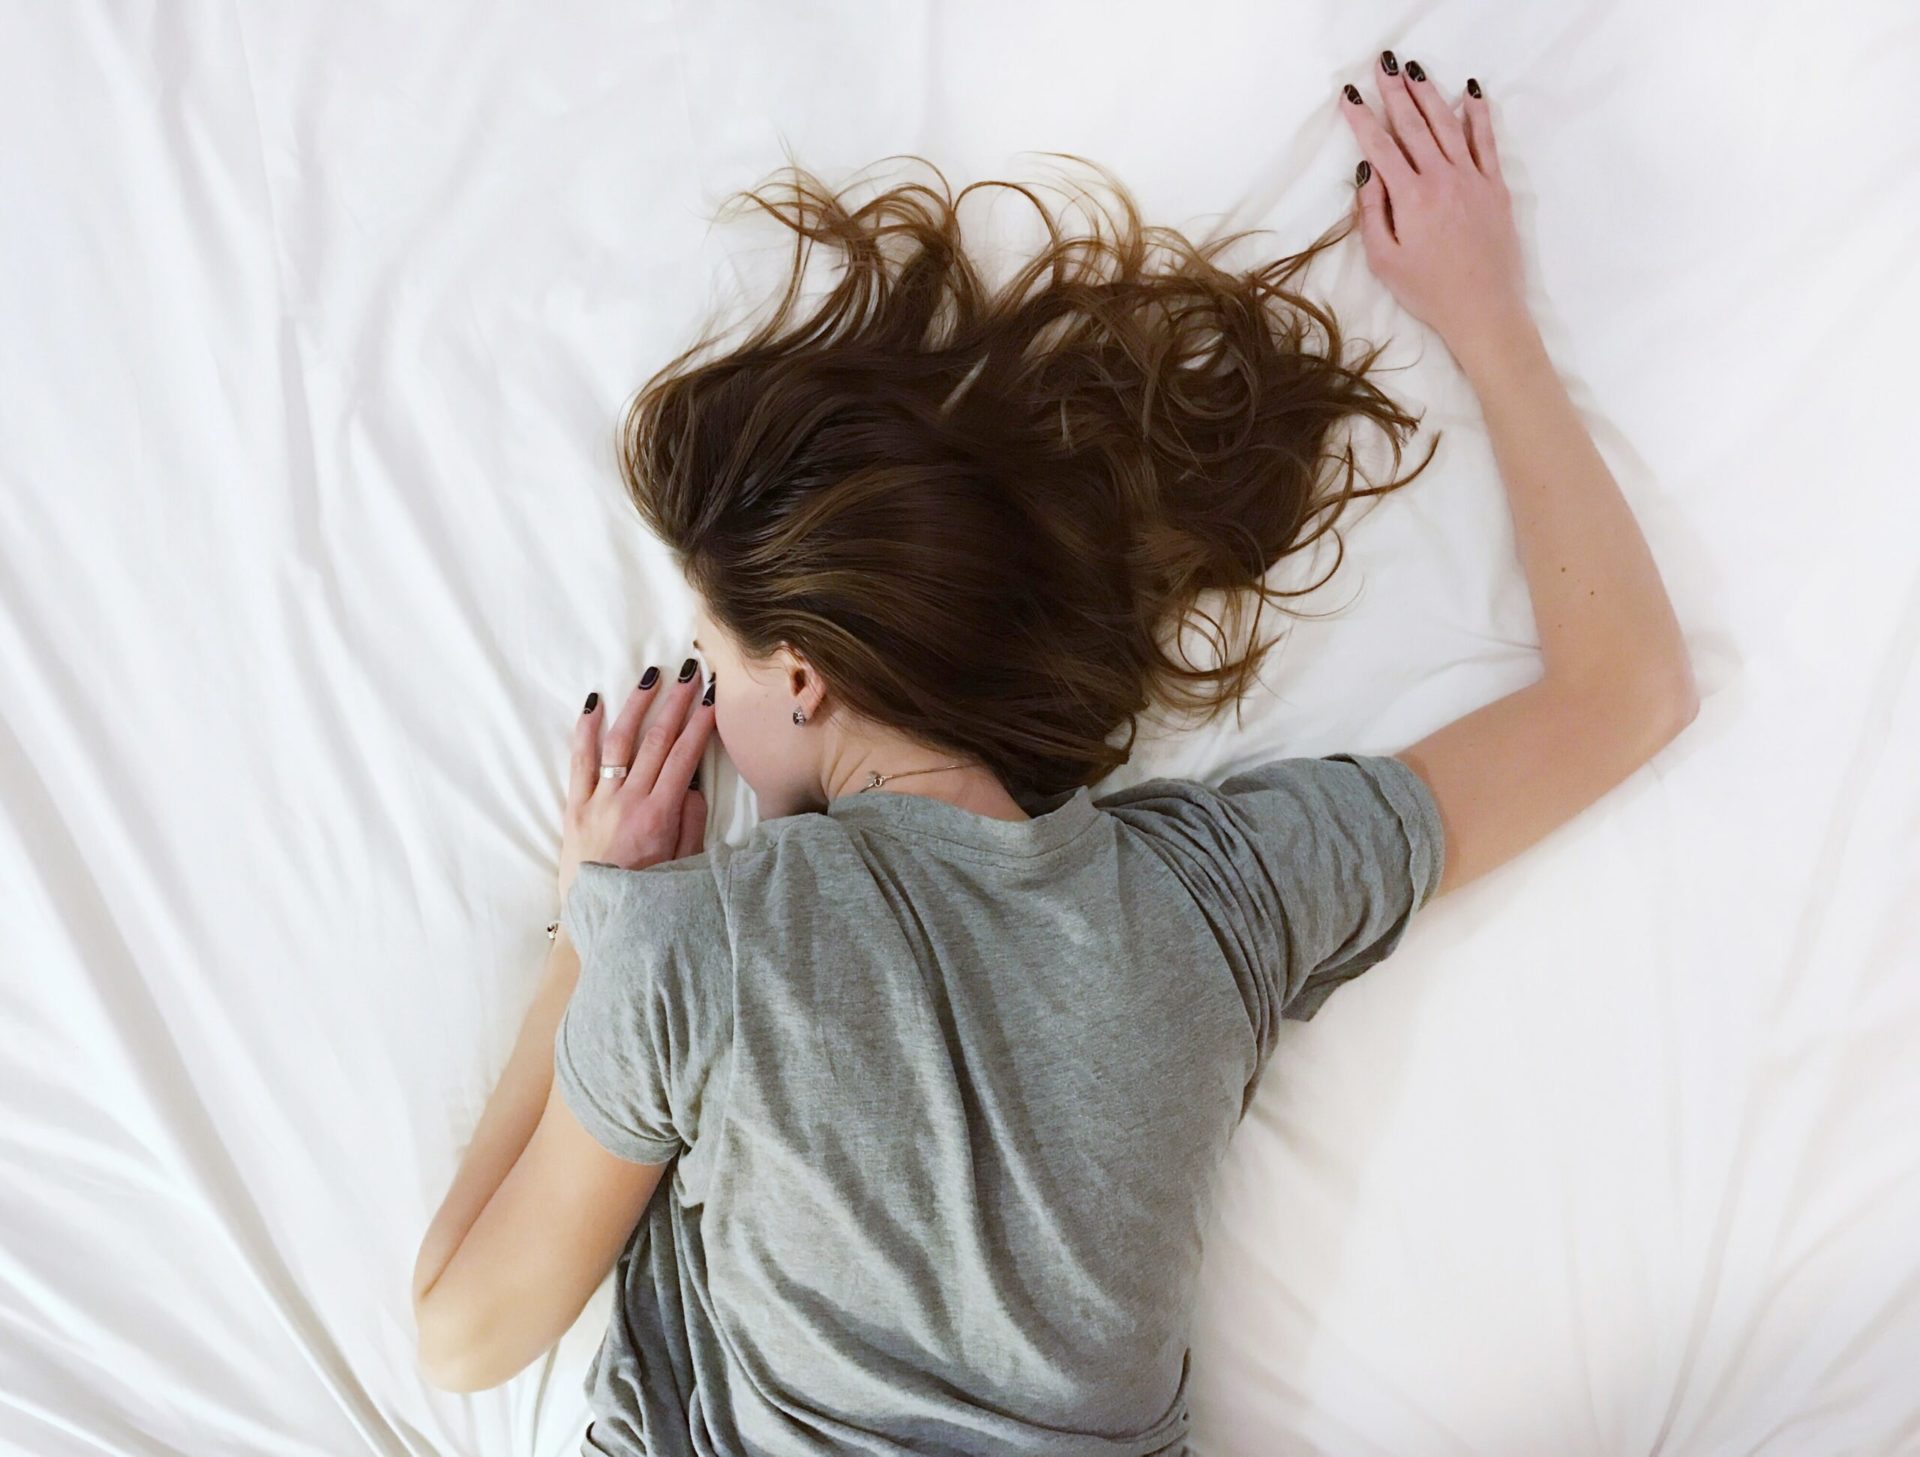 The 6 secrets of sleep